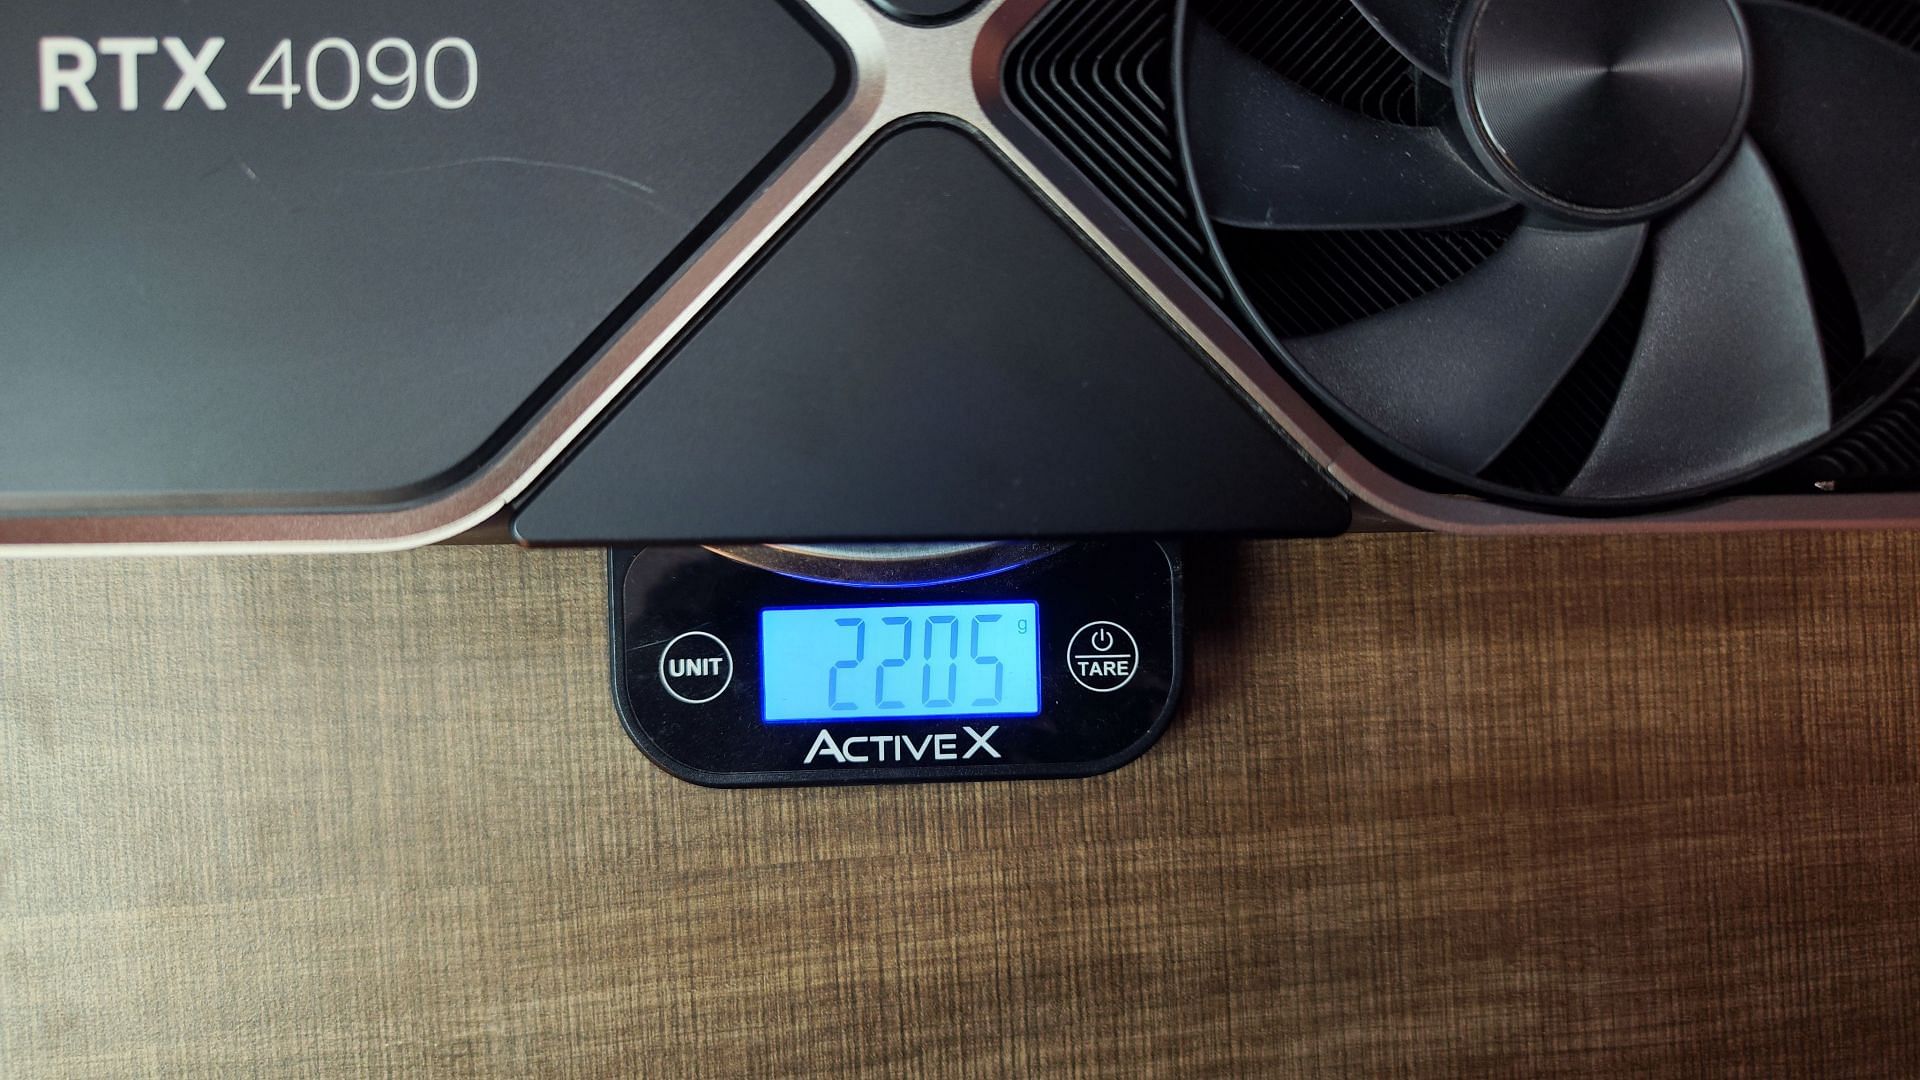 The 4090 weights over 2.2kg (Image via Sportskeeda)